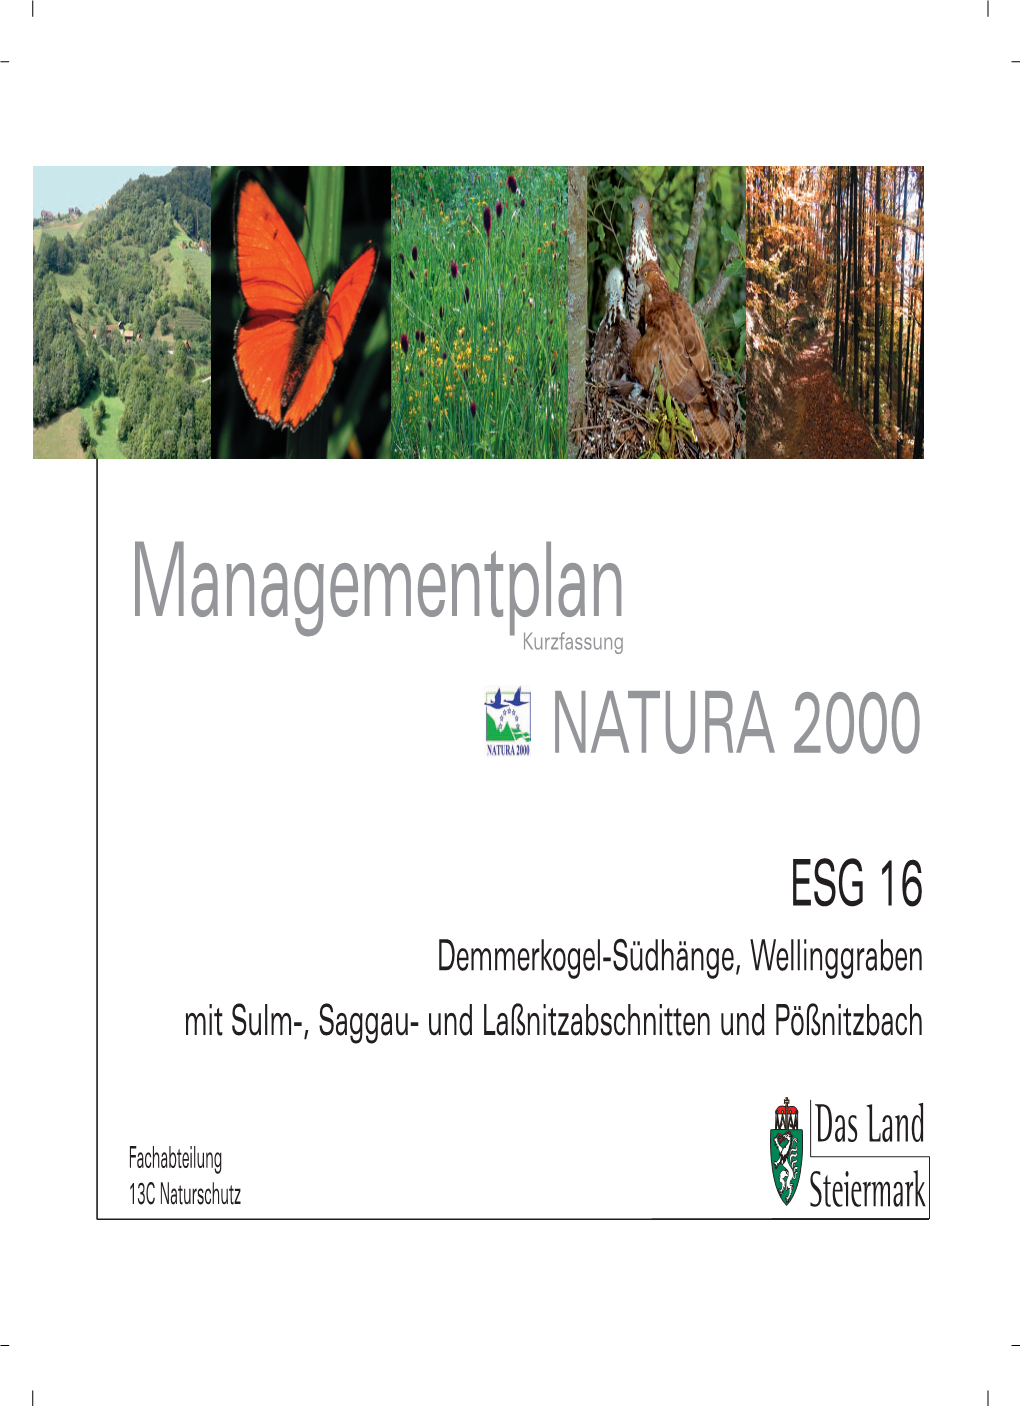 Managementplan Kurzfassung NATURA 2000